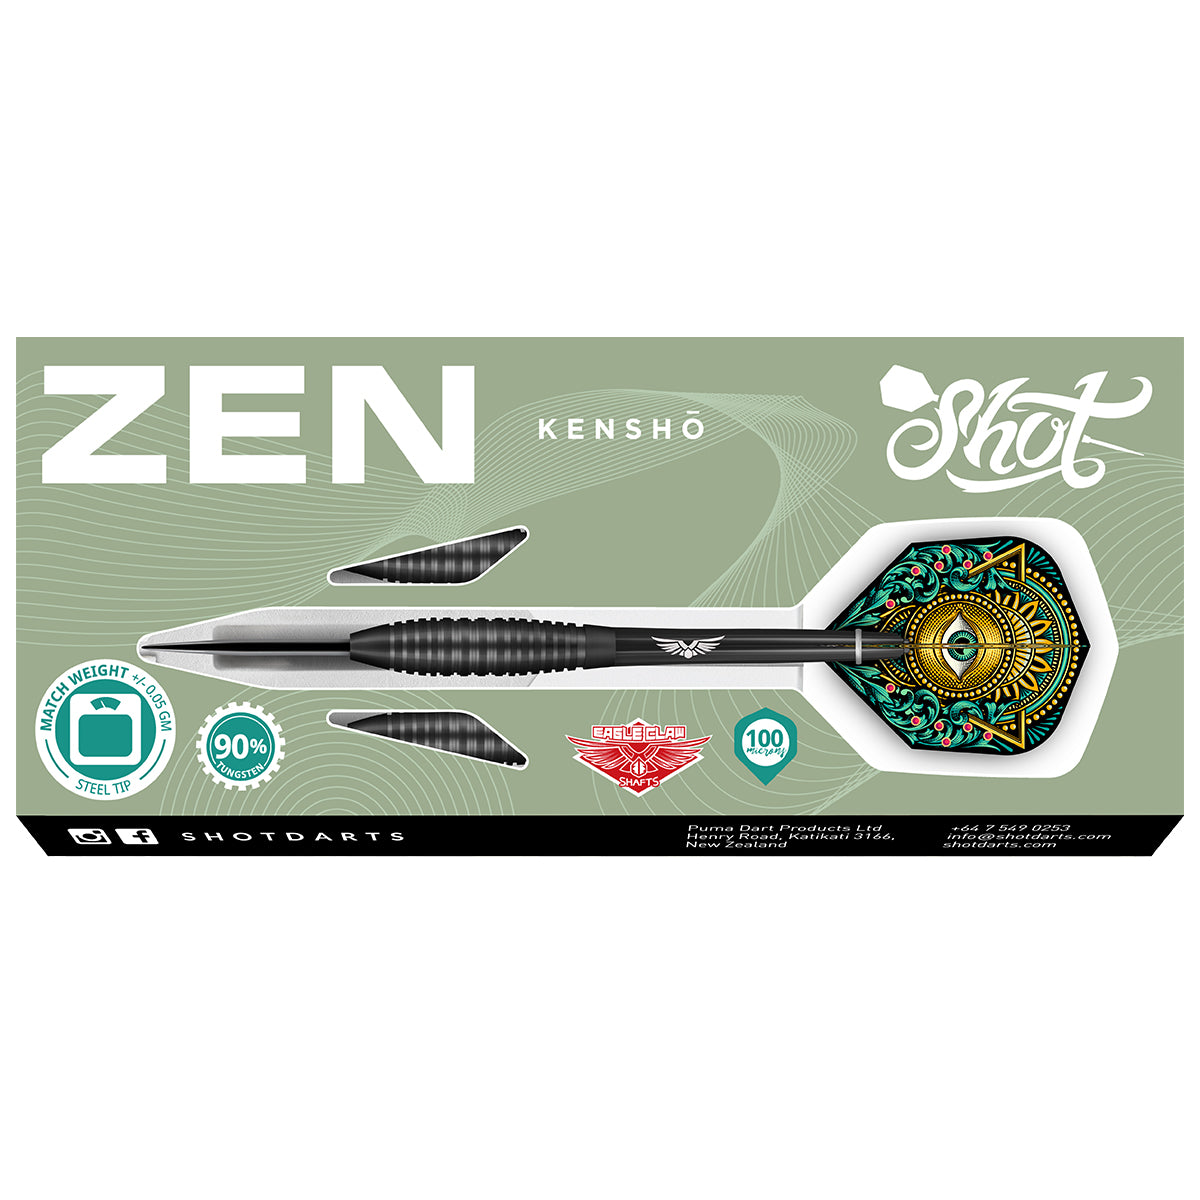 Shot Zen Kensho 25gm 90% Tungsten Steel Tip Darts 